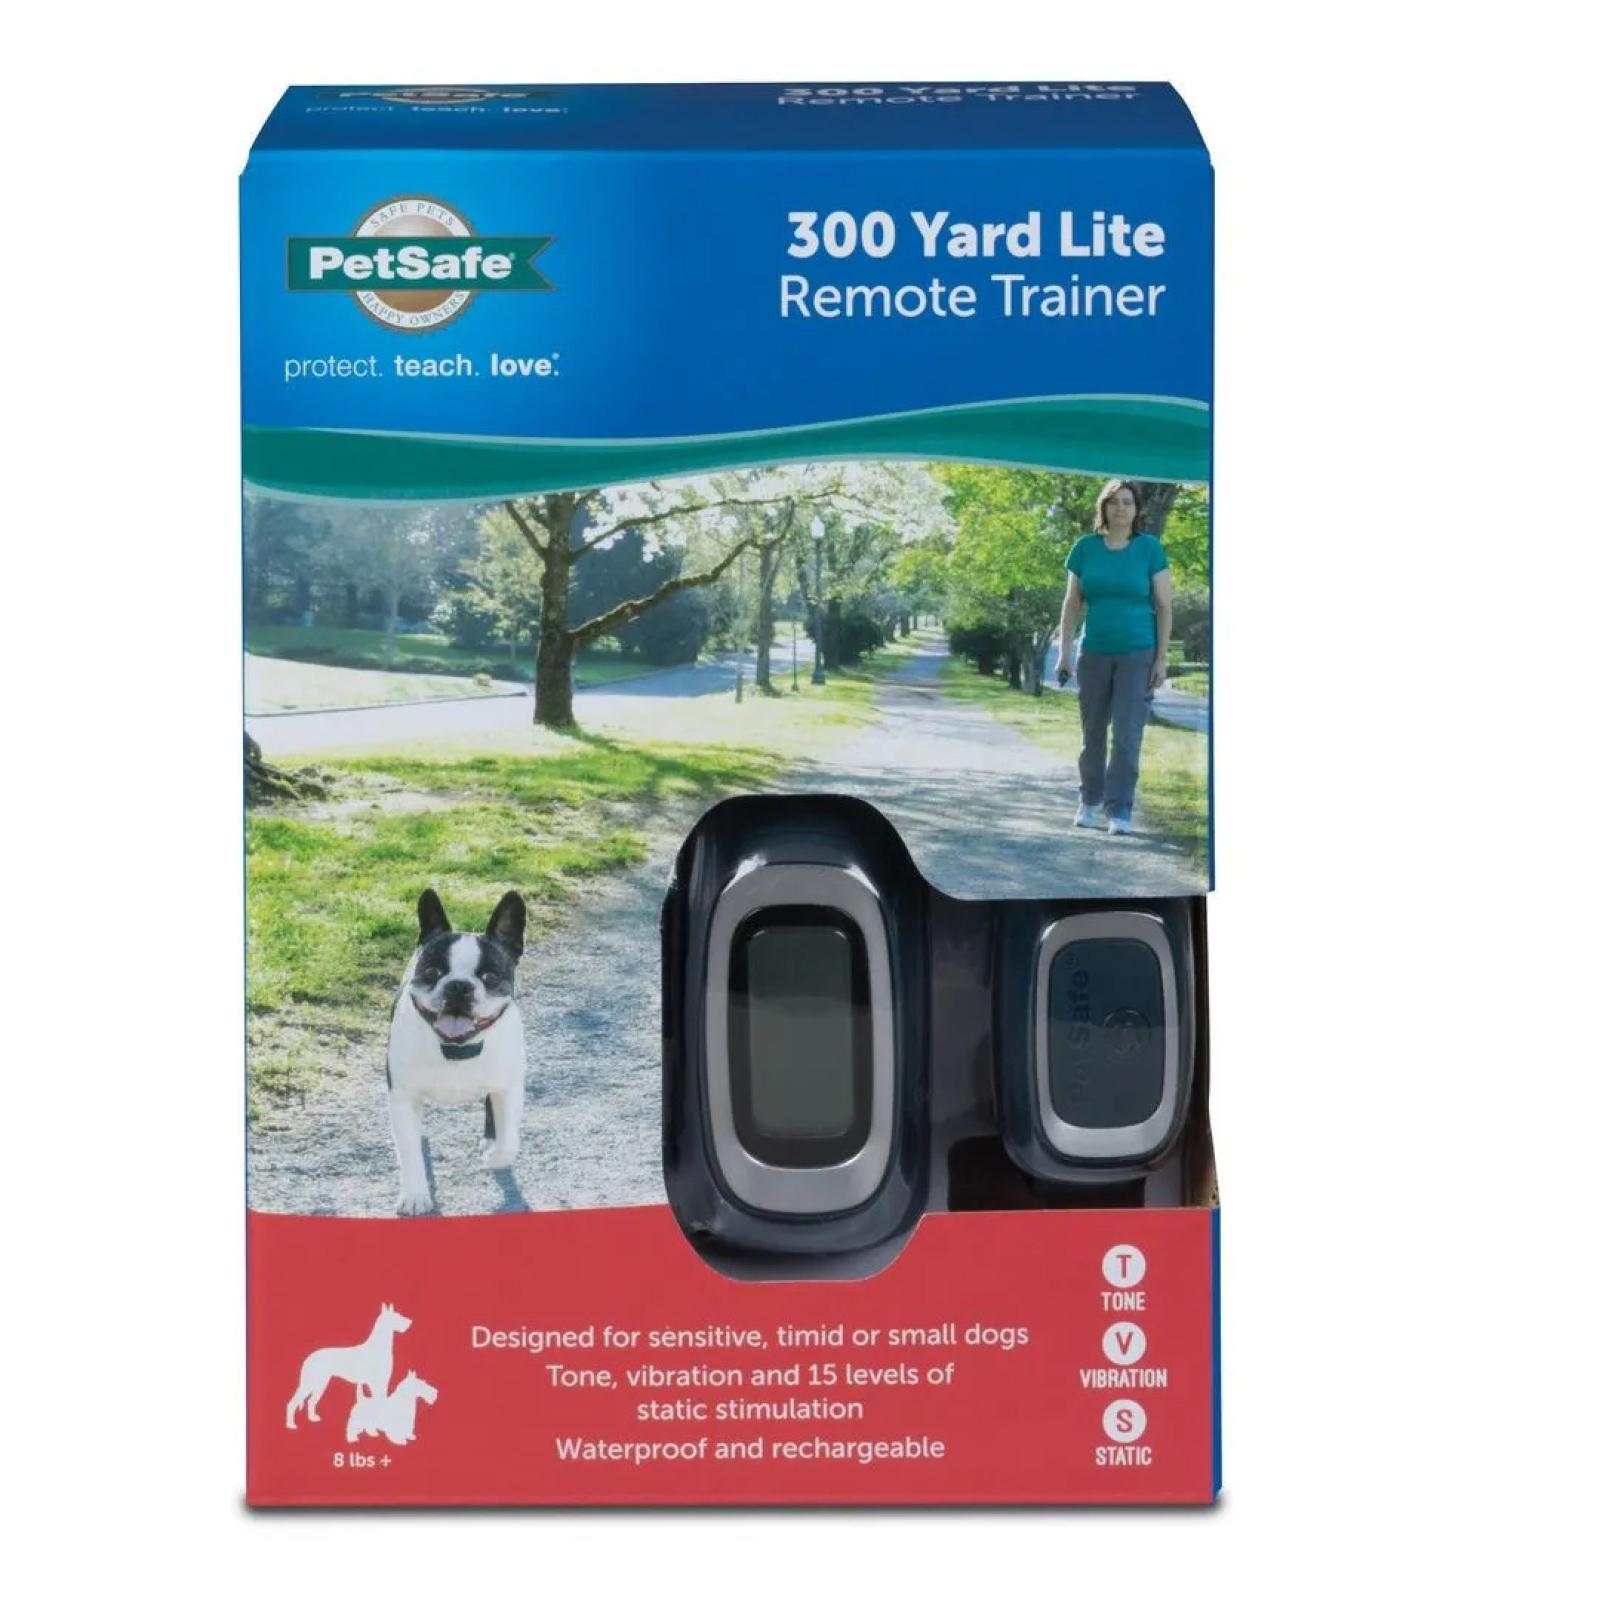 PetSafe 300 Yard Lite Remote Trainer